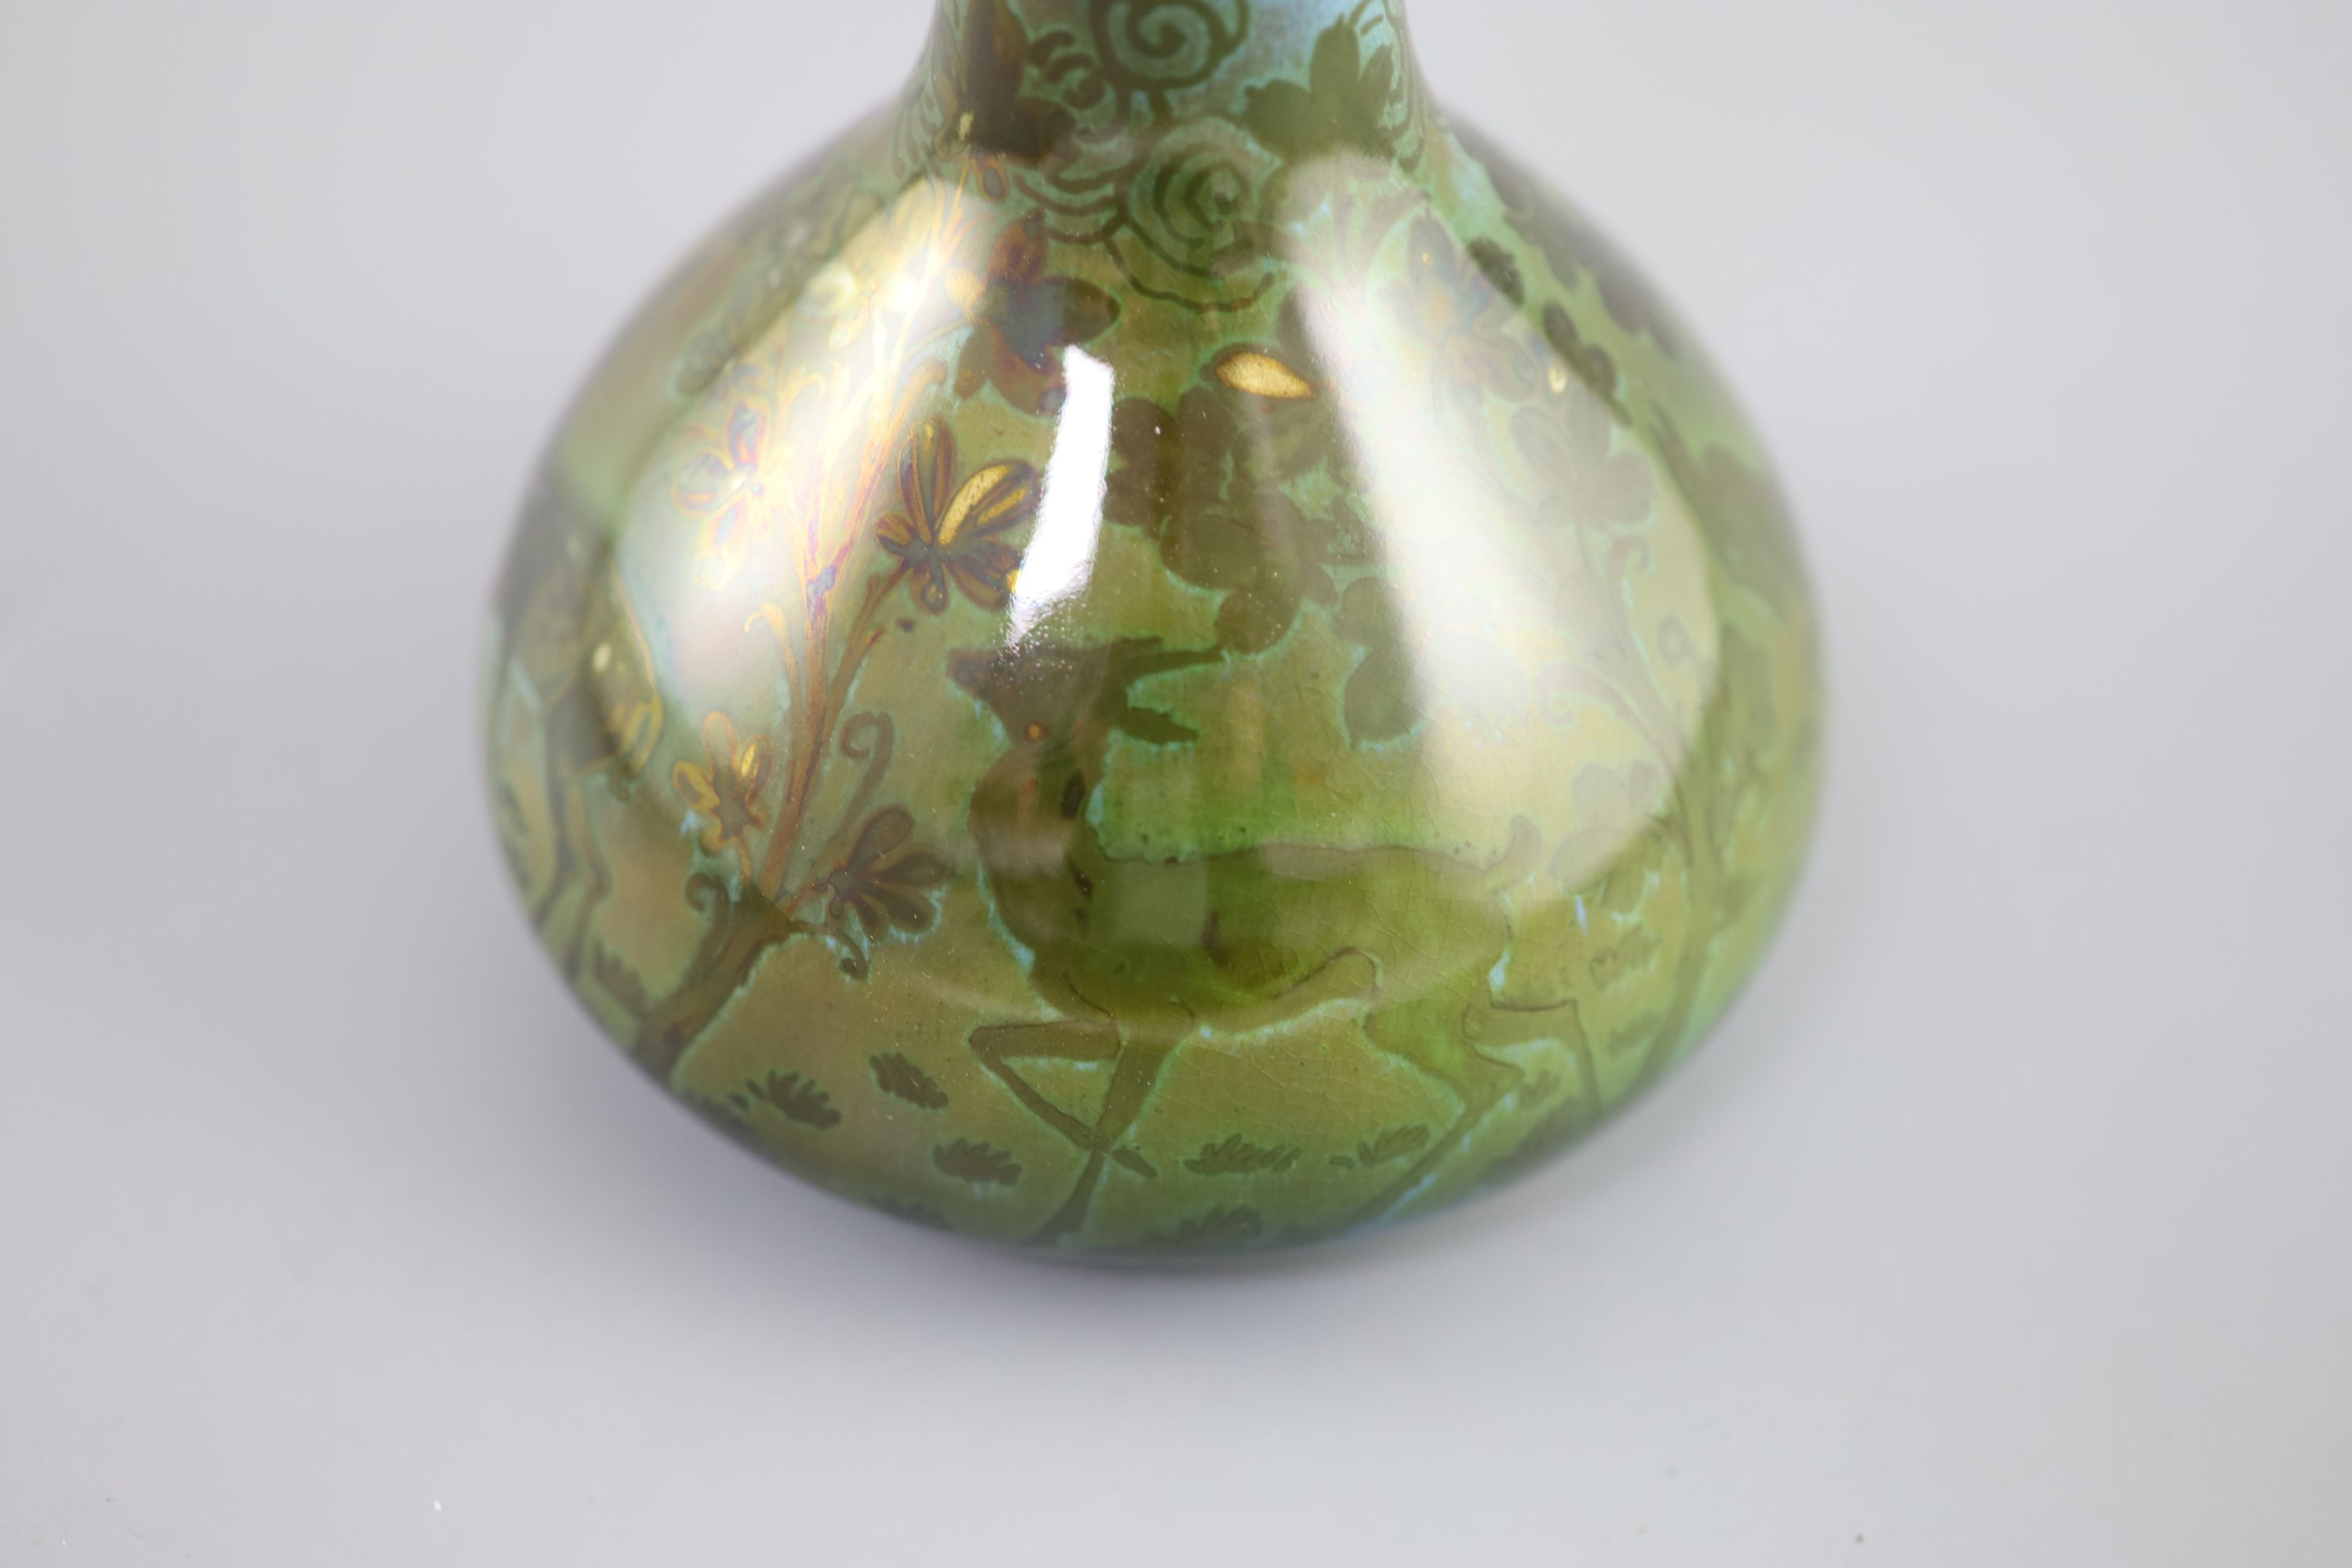 Richard Joyce for Pilkington Royal Lancastrian. A lustre bottle vase, 22.3cm high